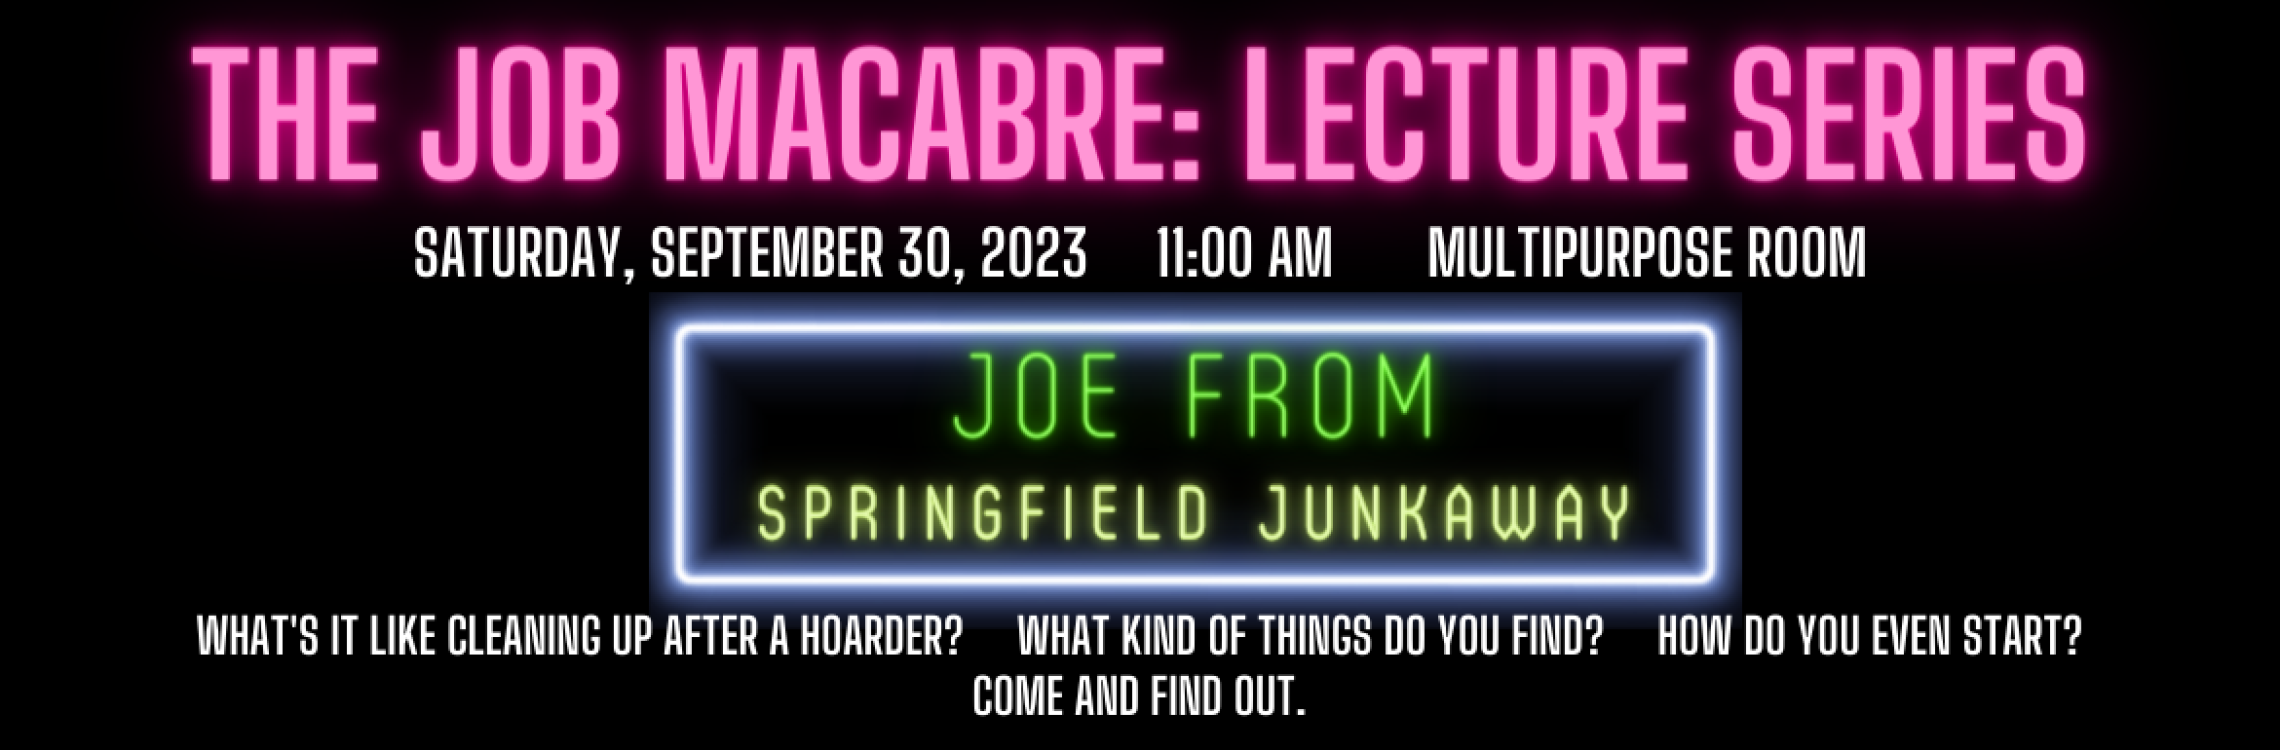 Job macabre lecture series; Joe from Springfield Junkaway 11am September 30th in the Multipurpose Room